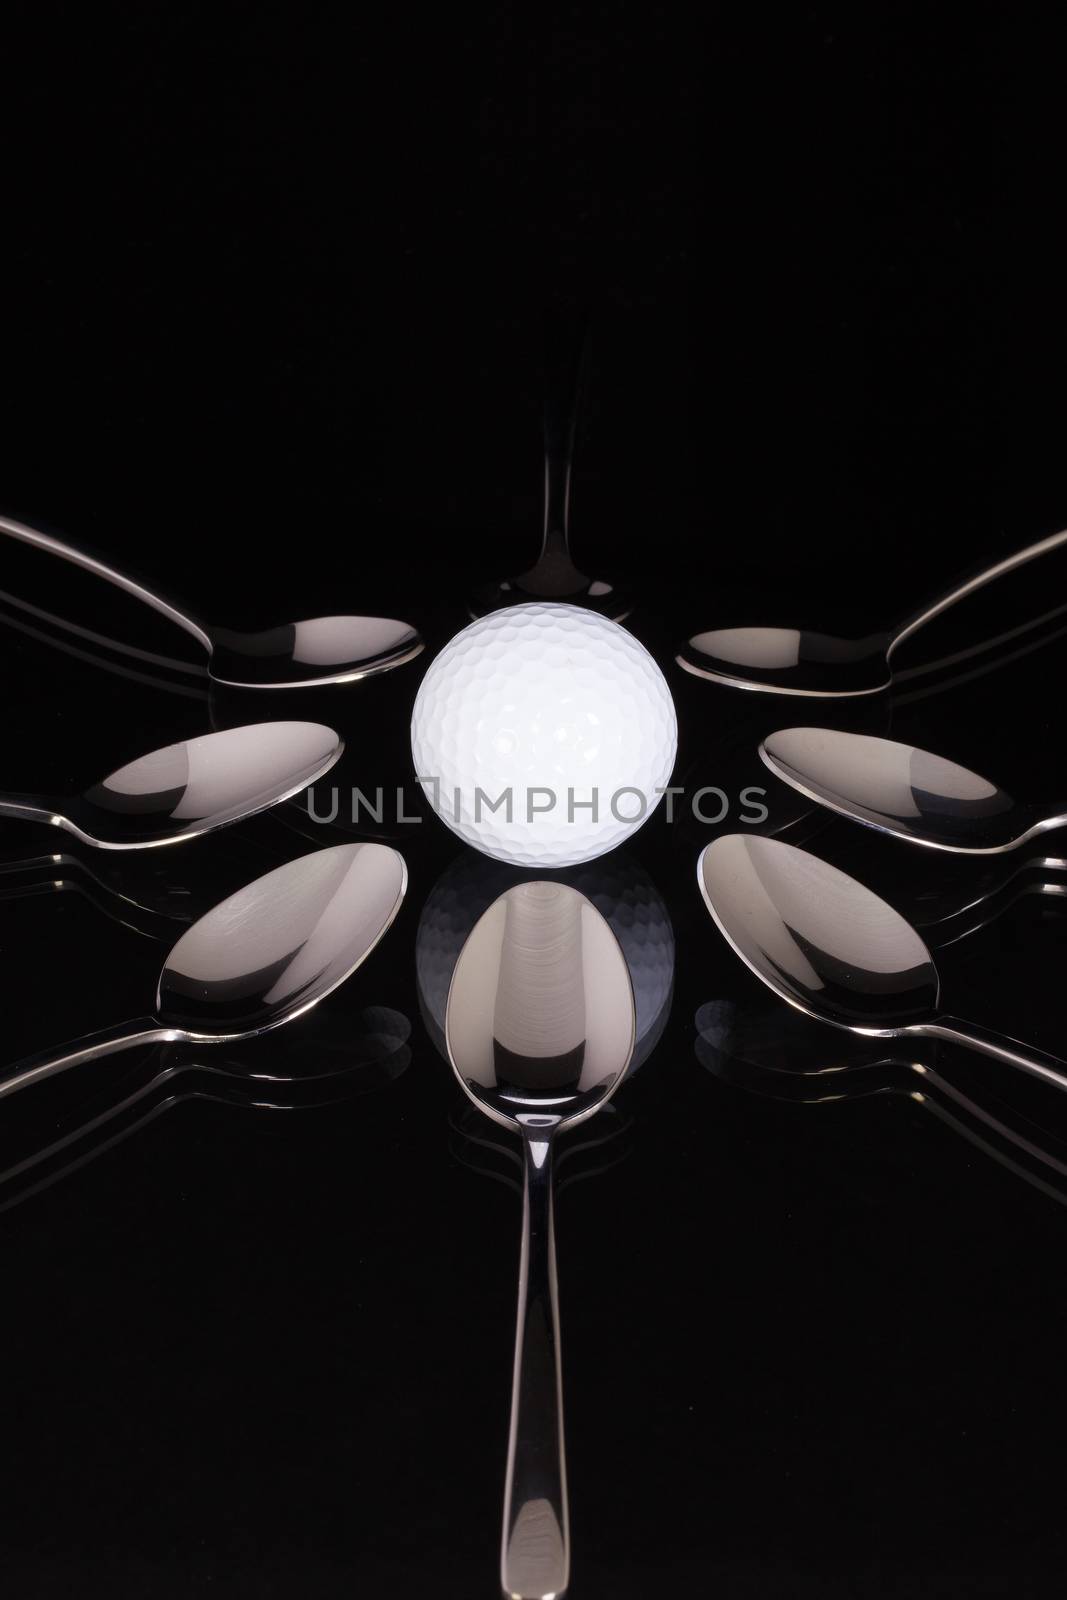 Teaspoons and white golf ball on the black glass desk